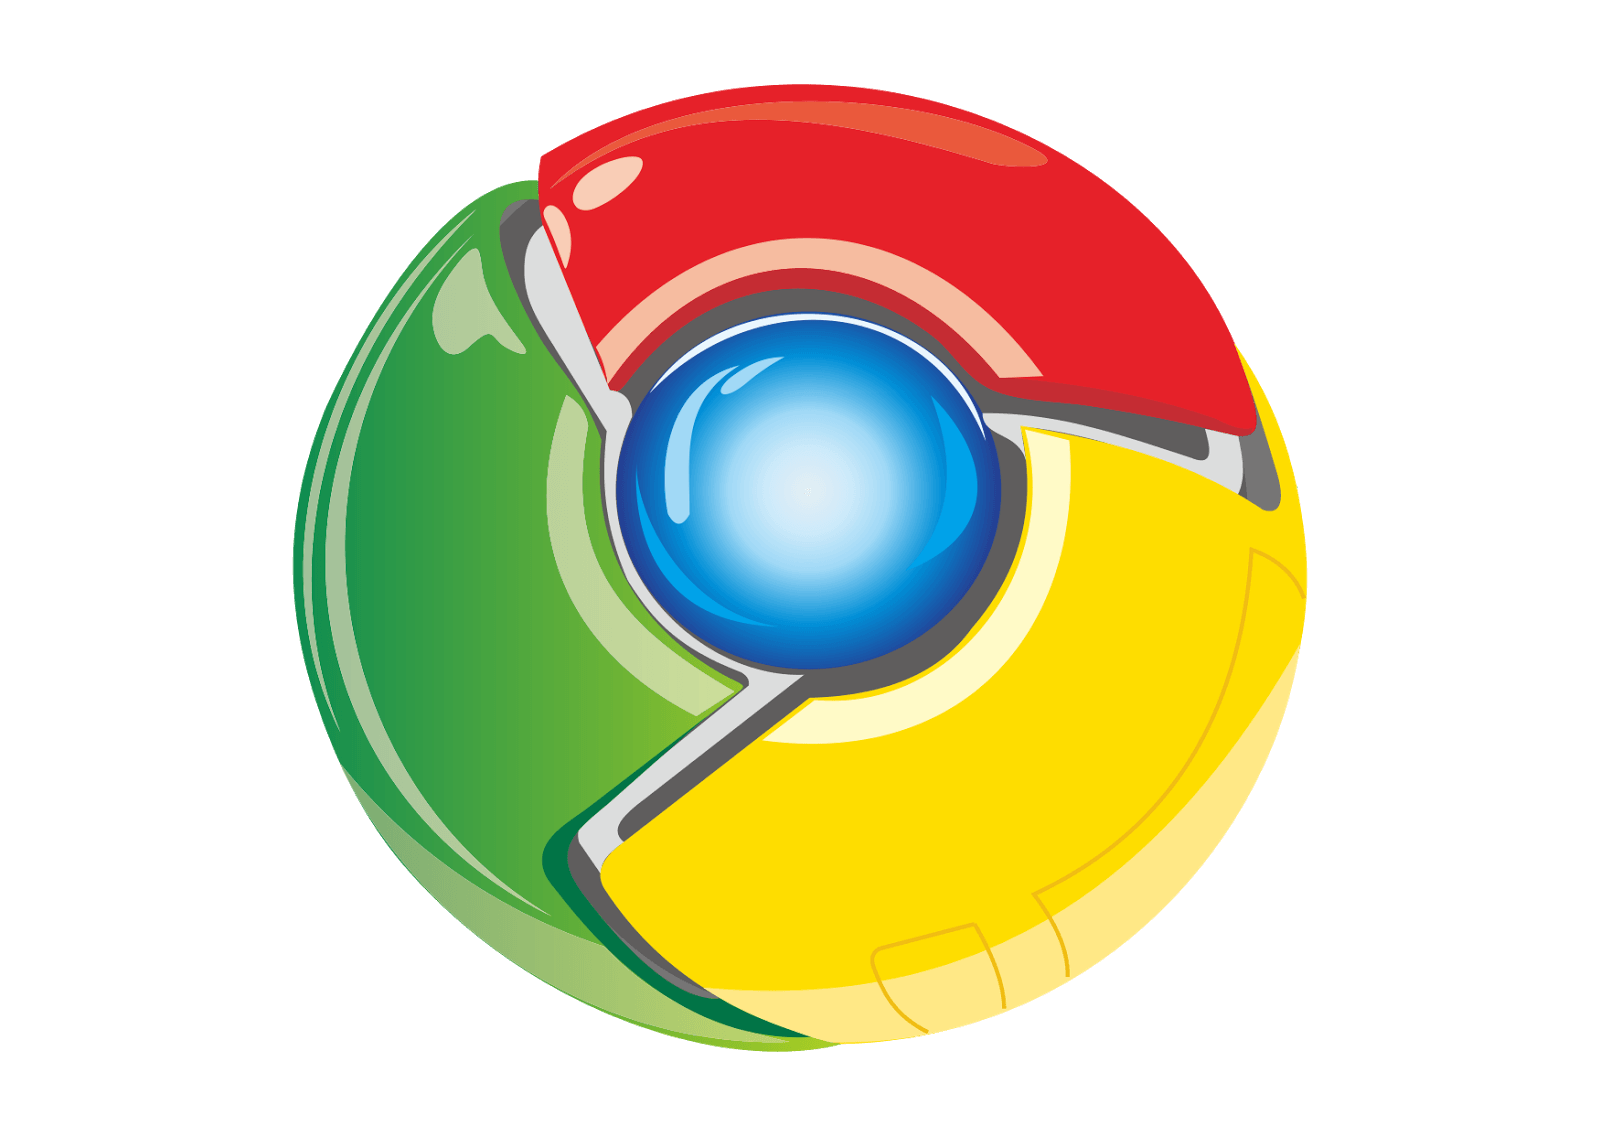 Chrome Old Logo - Google Chrome Logo Vector Format Cdr, Ai, Eps, Svg, PDF, PNG